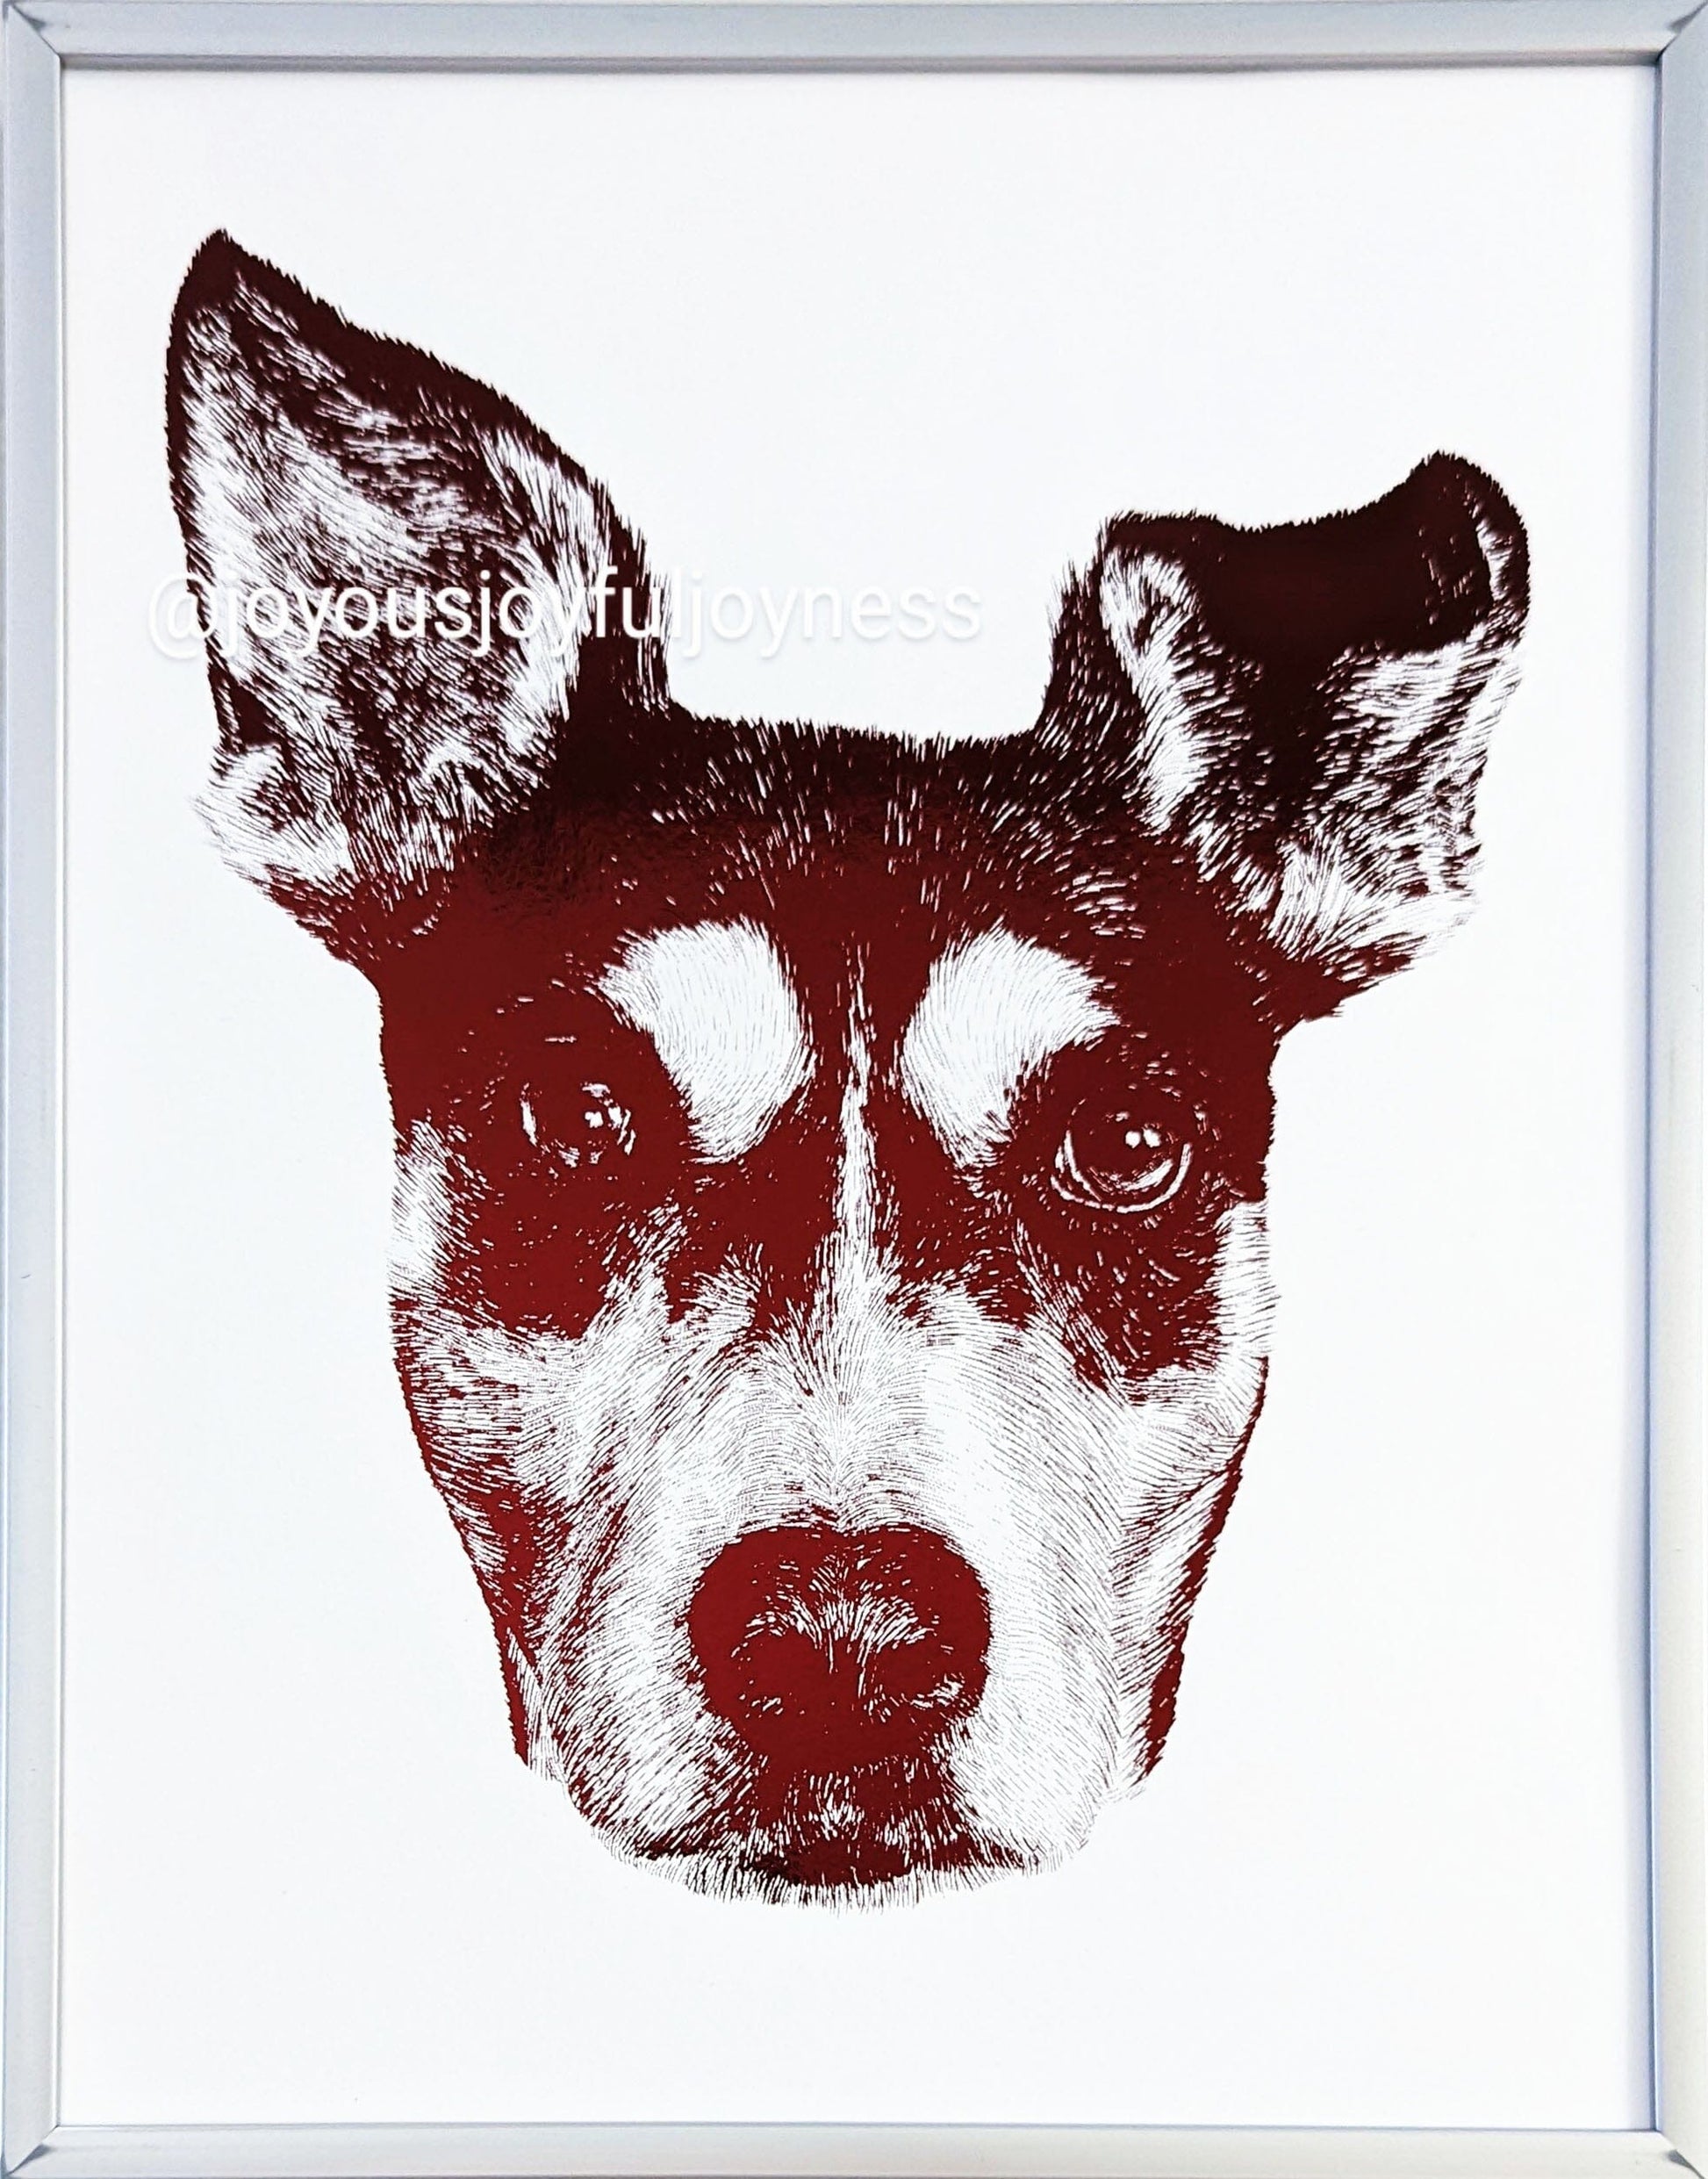 Hand Painted Dog Portraits Posters, Prints, & Visual Artwork JoyousJoyfulJoyness 